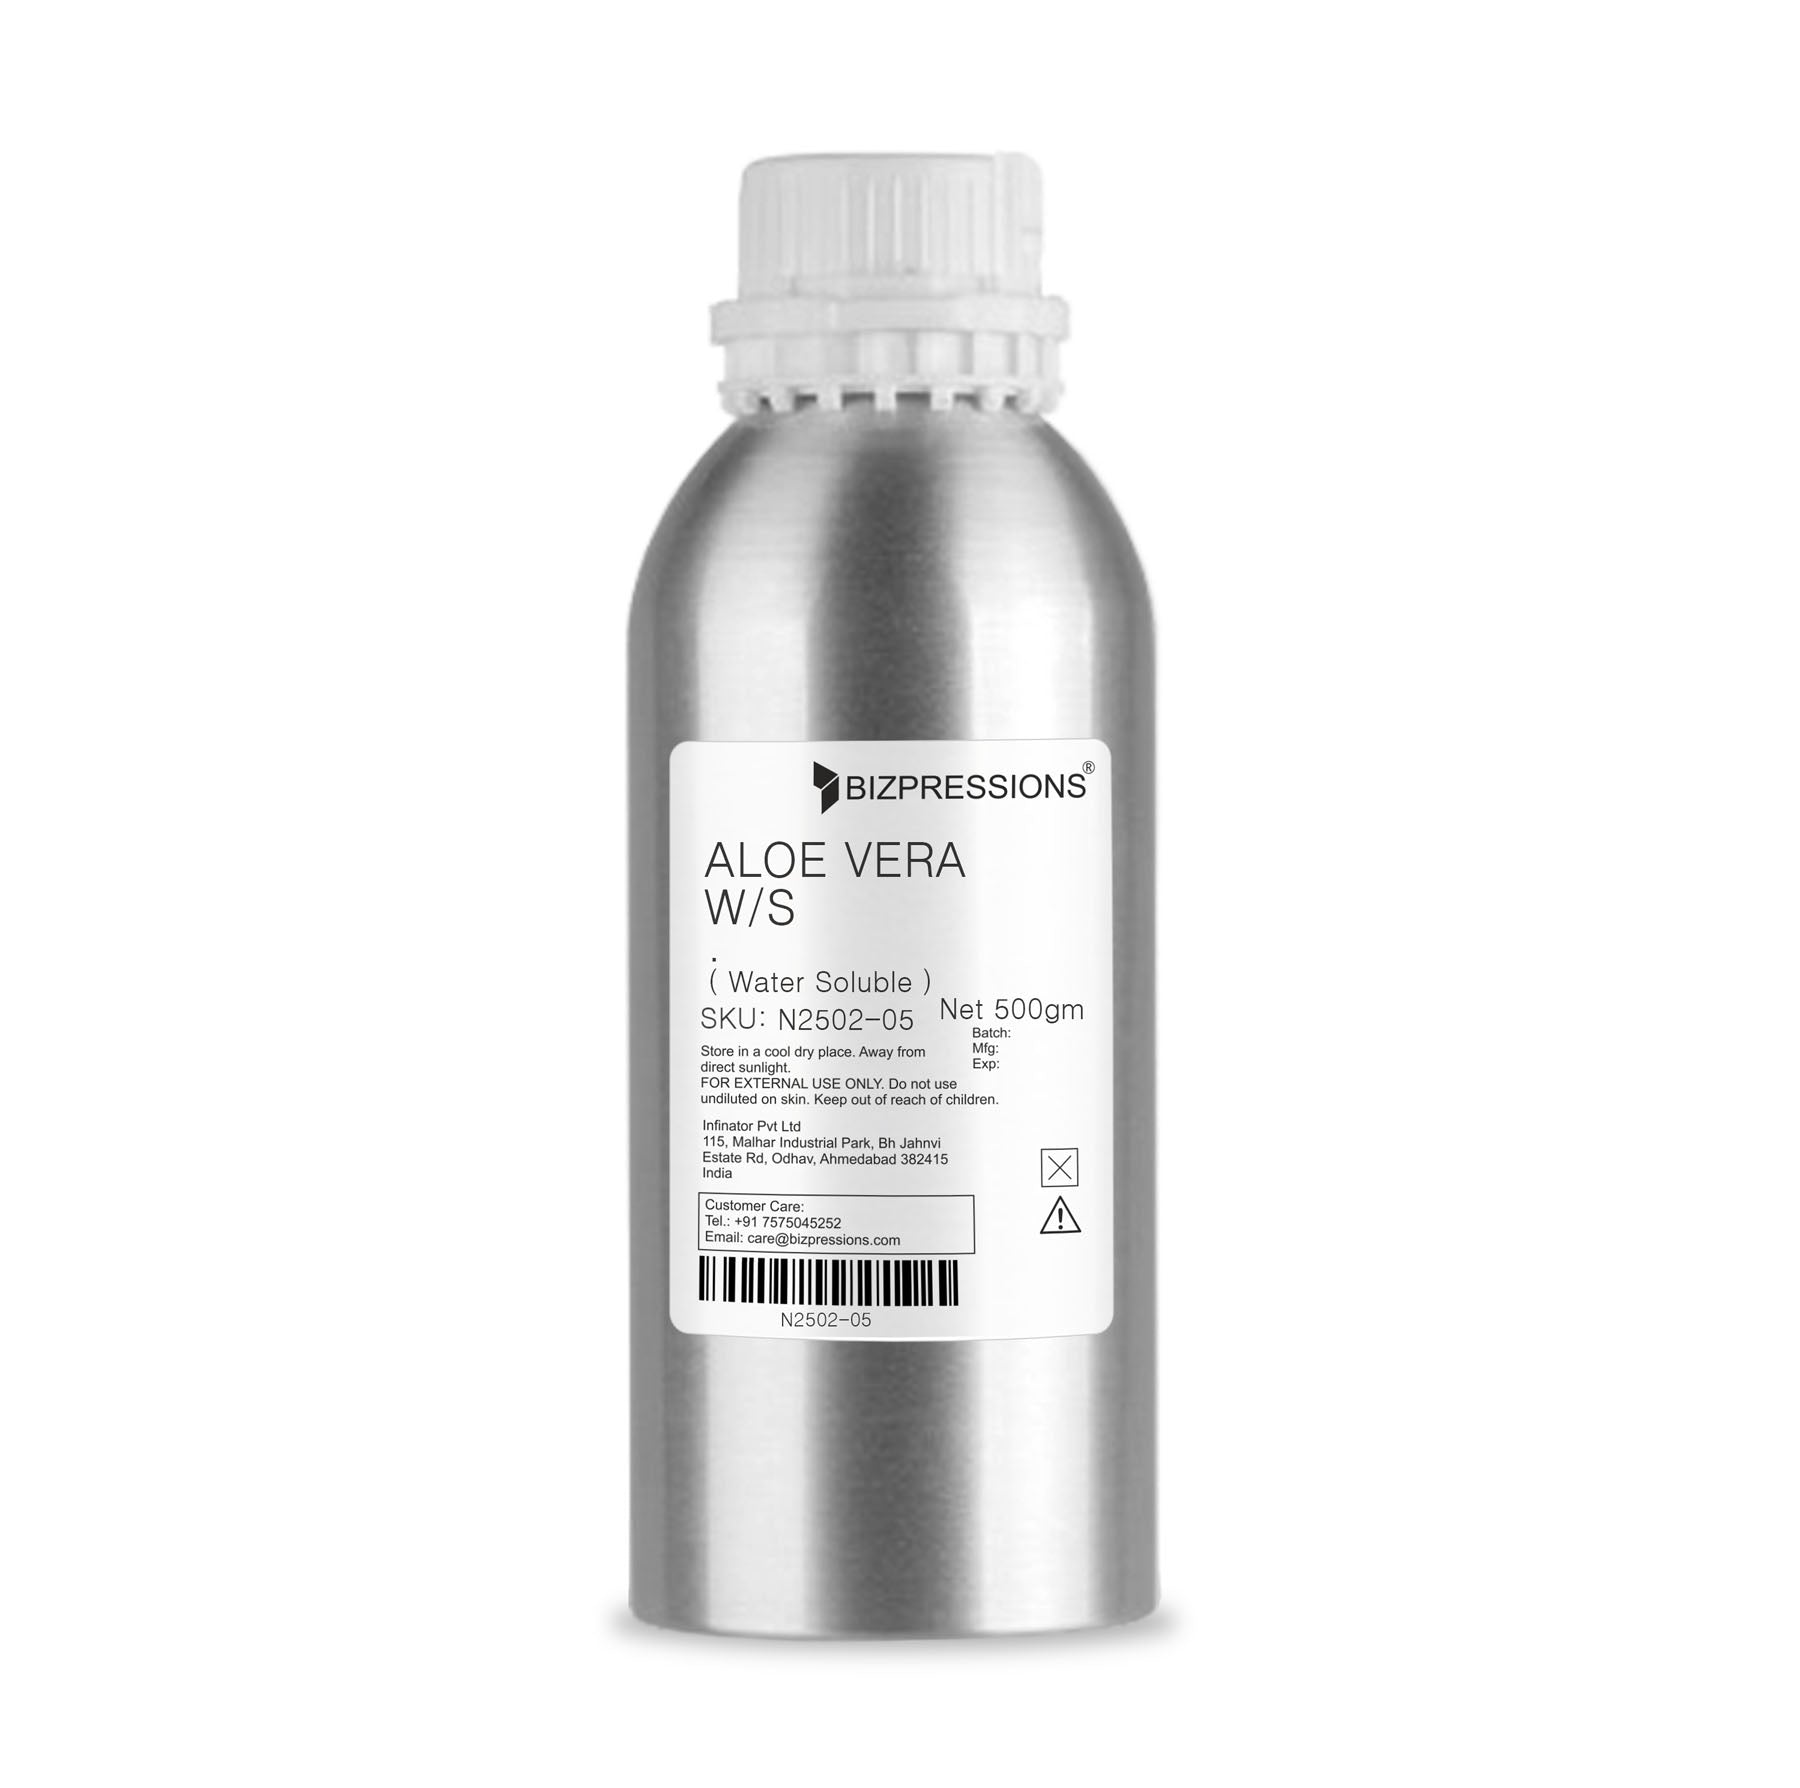 ALOE VERA W/S - Fragrance ( Water Soluble ) - 500 gm